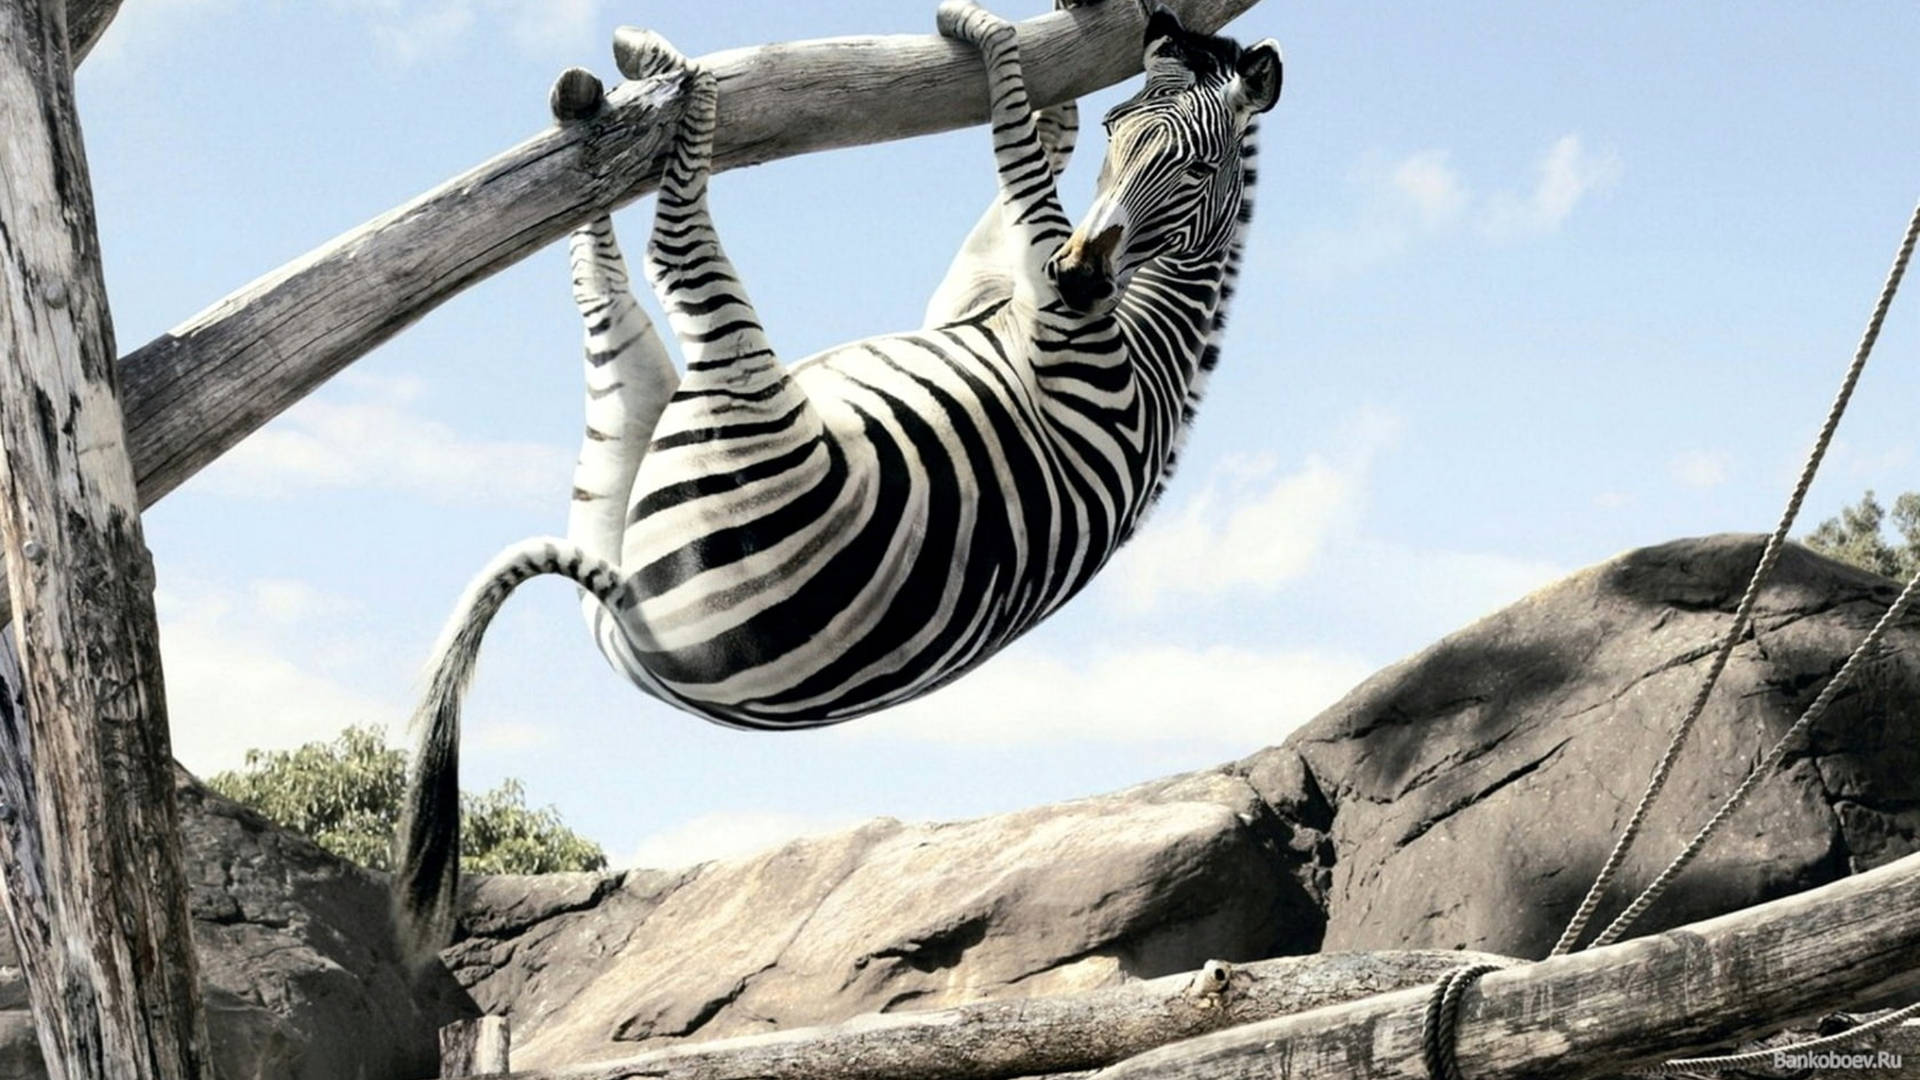 Zebra Hanging On Tree Background